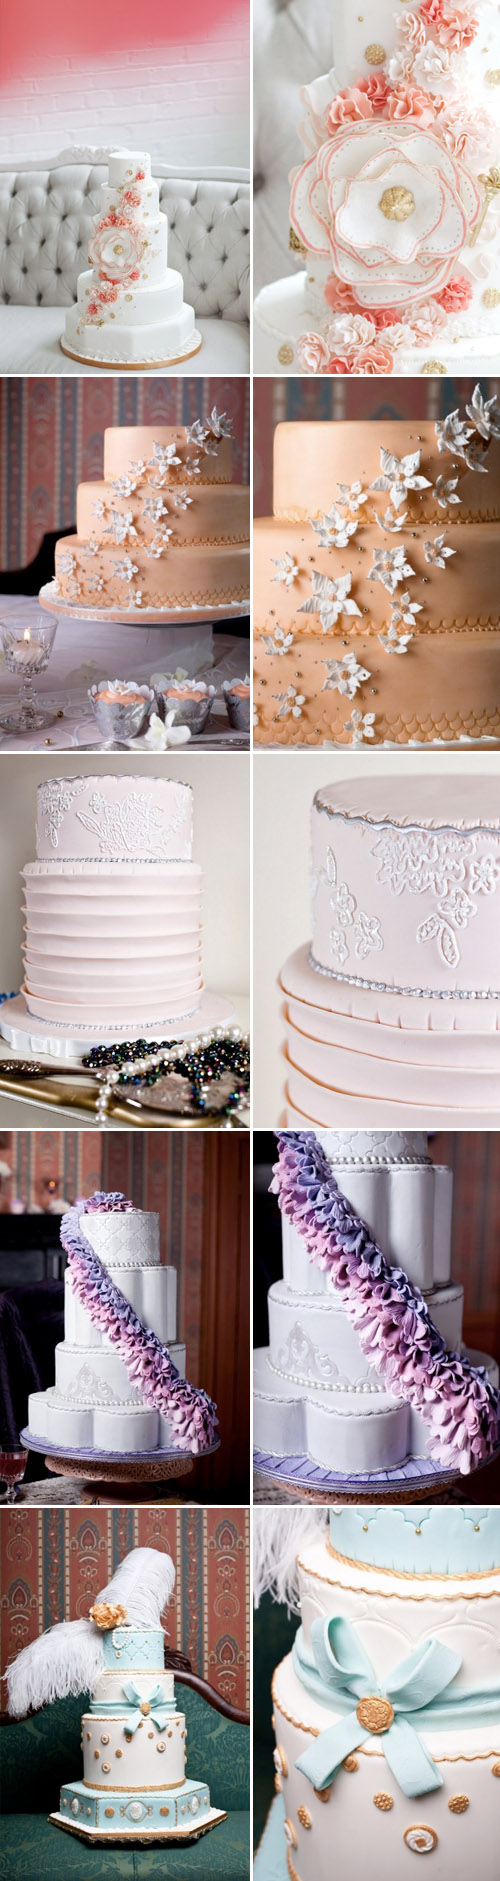 amazing fashion inspired wedding cakes from Lori Hutchinson of Toronto's The Caketress